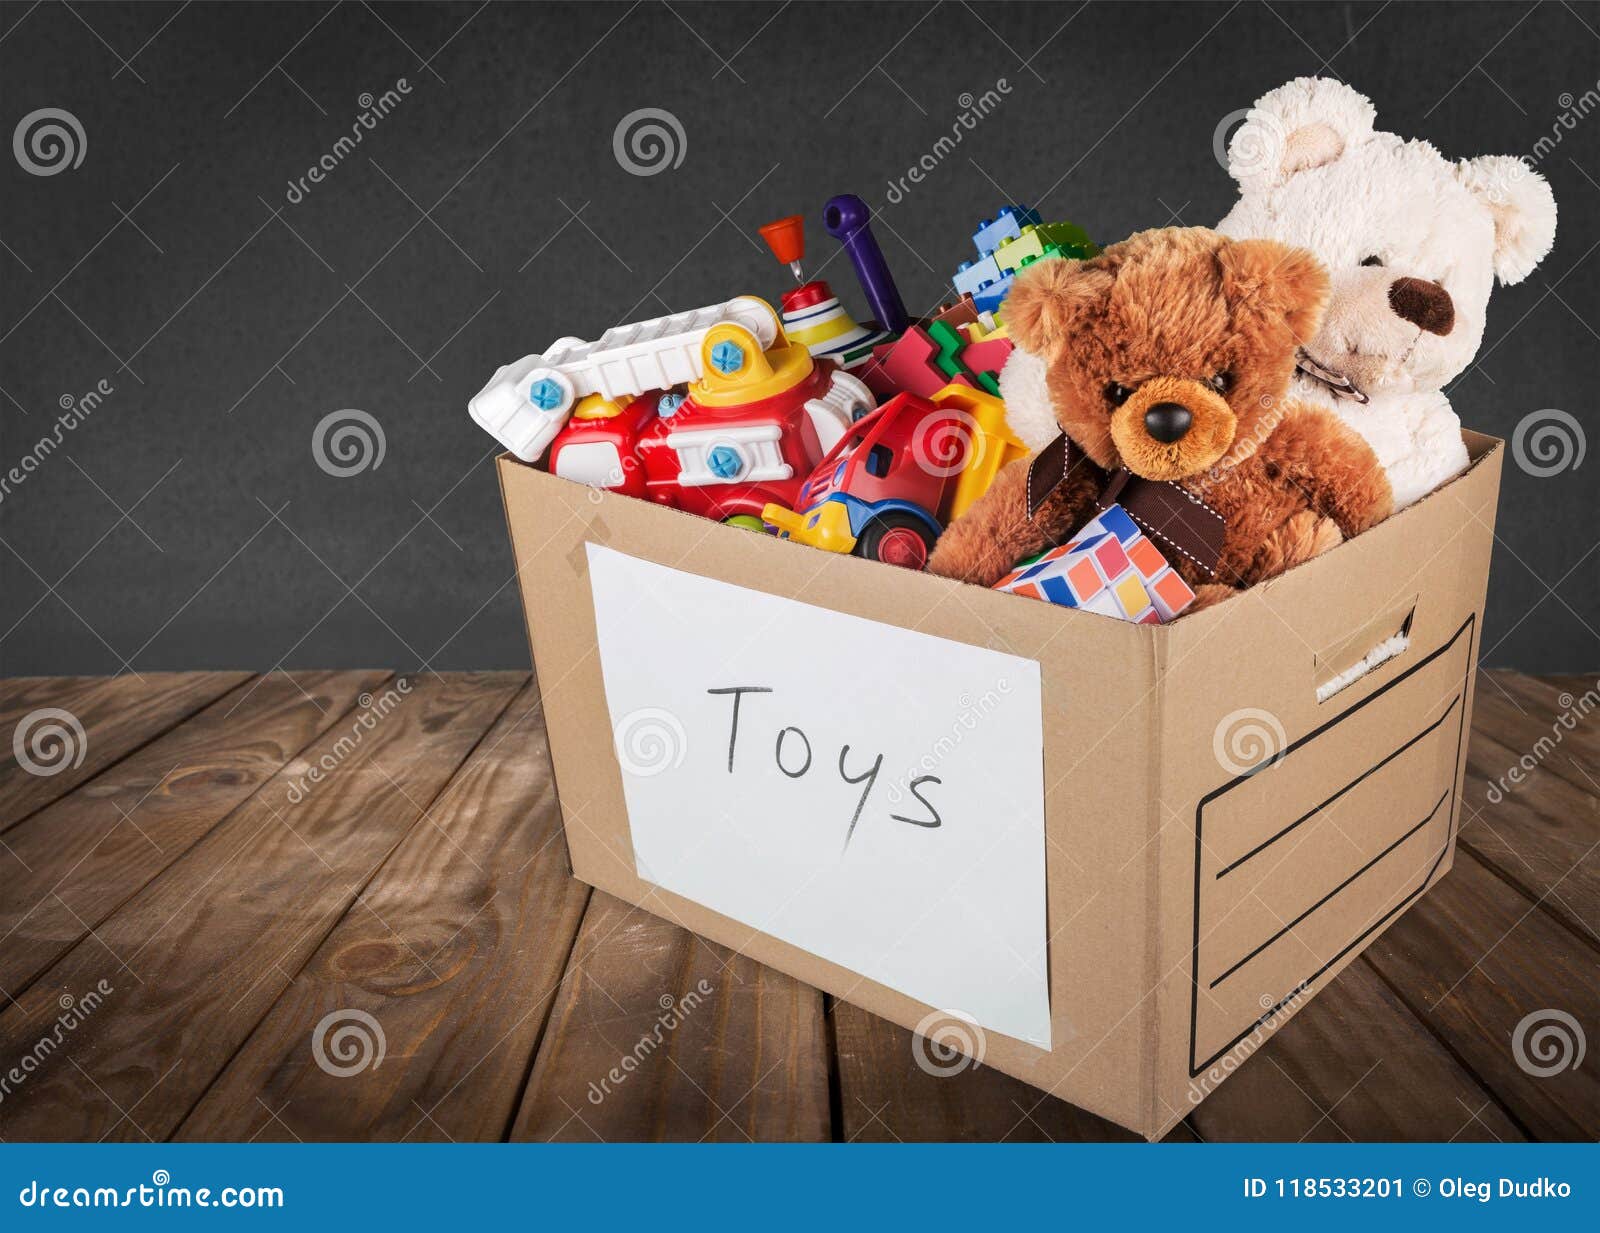 boat toy box